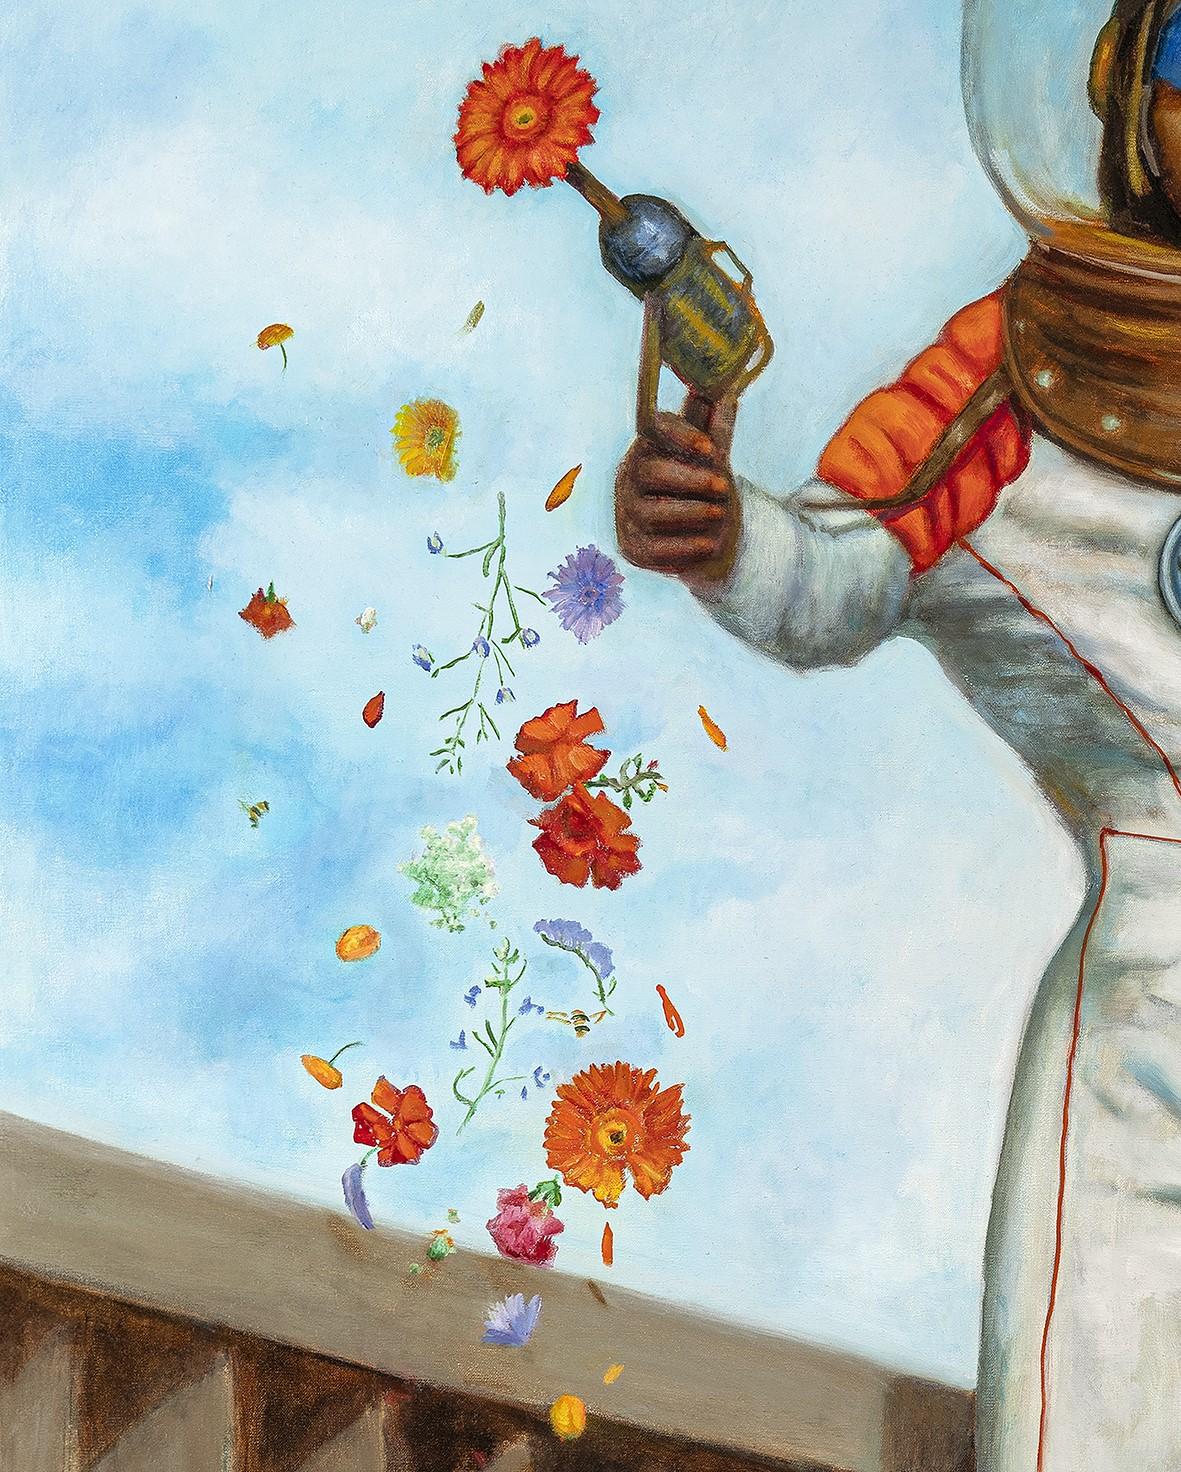 Flower Power with a modern twist.  Artist Rose Freymuth Frazier plays presents 